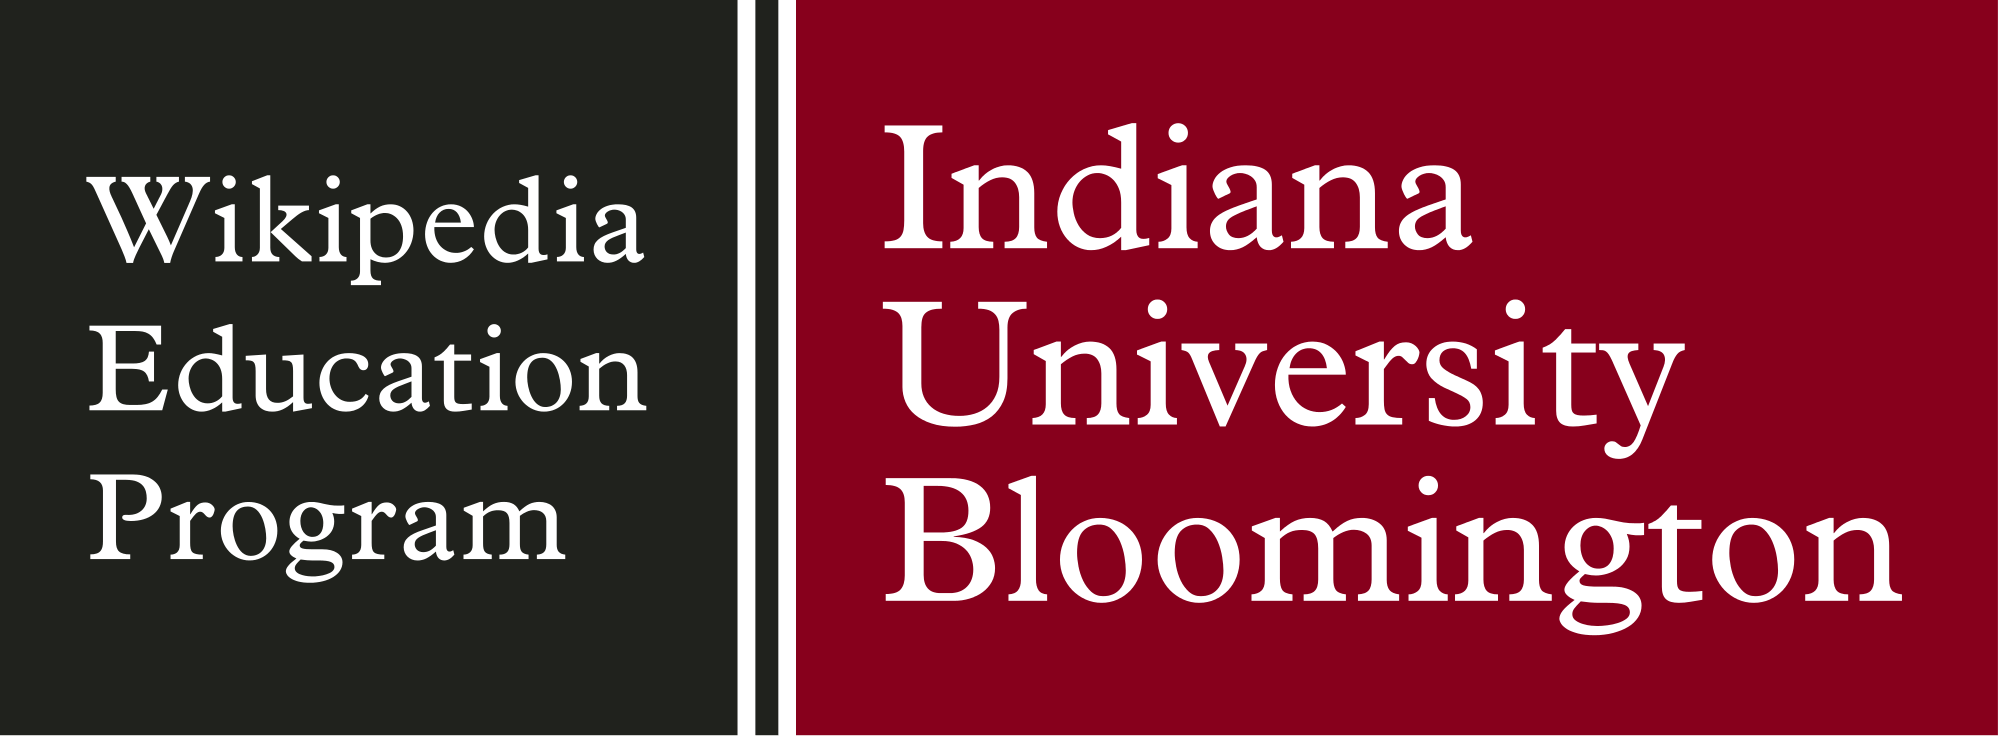 Indiana University Bloomington Logo - File:Wikipedia Education Program Indiana University Bloomington logo ...